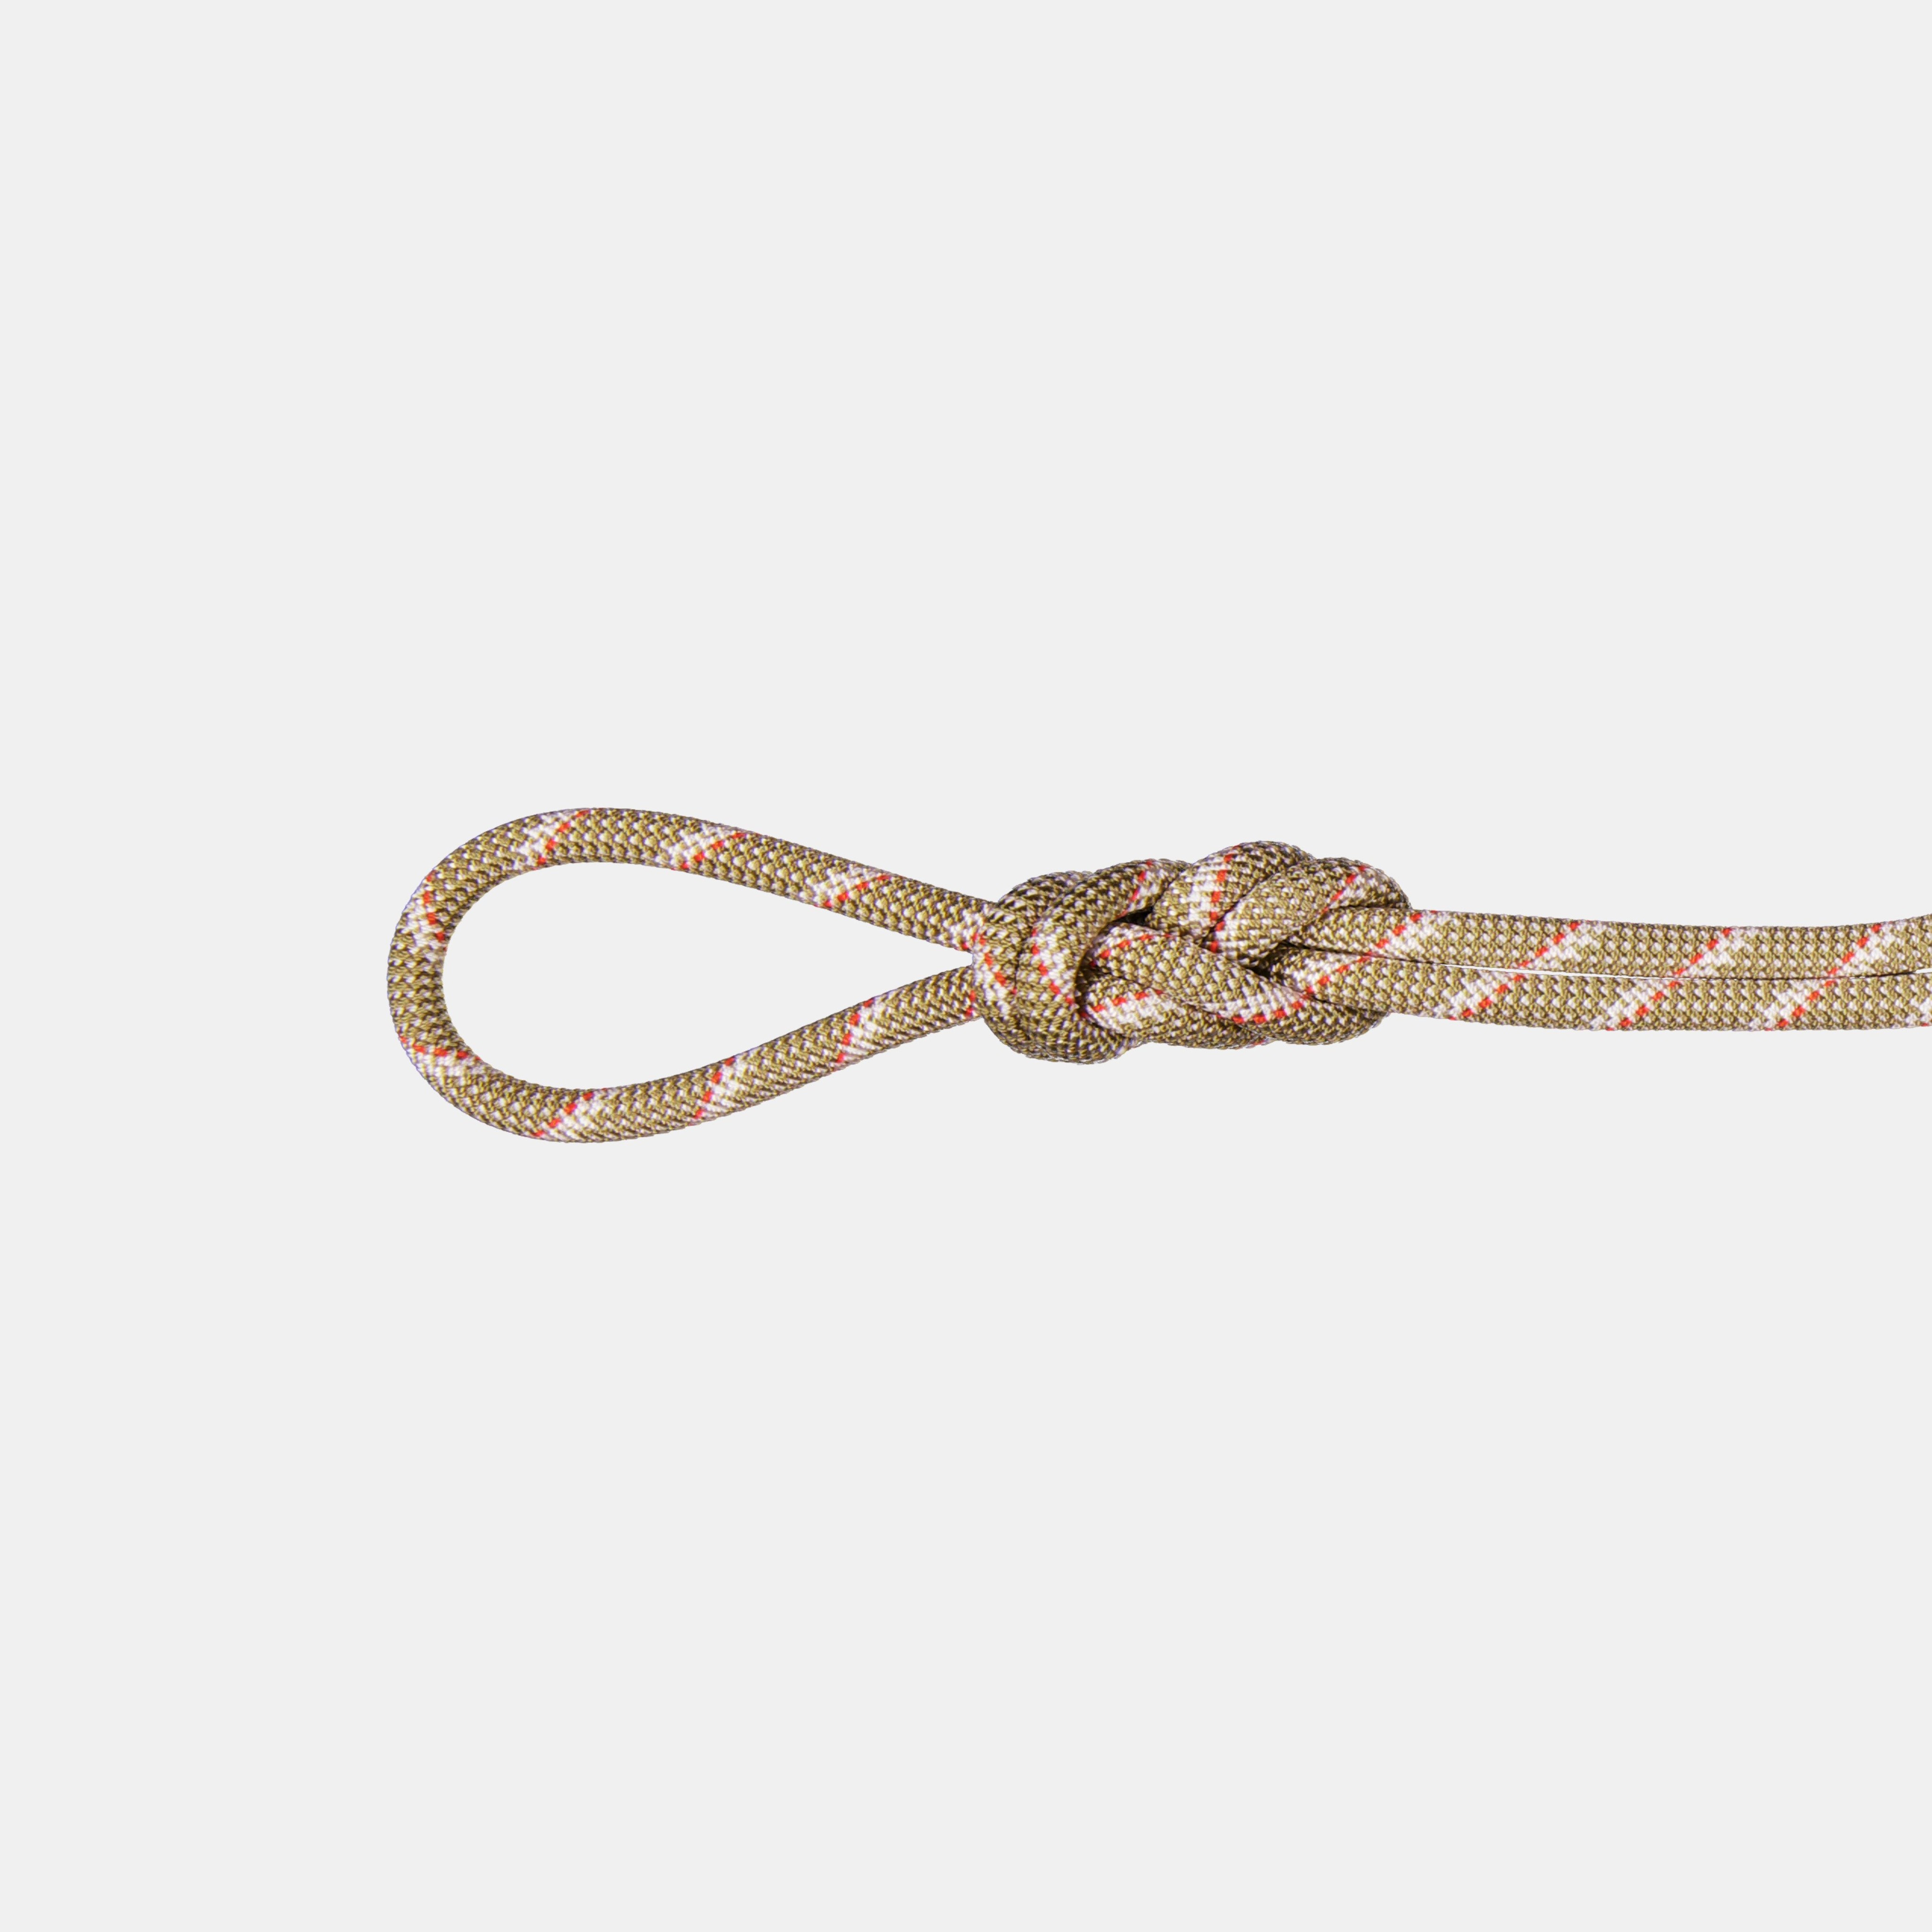 8.0 Alpine Classic Rope product image